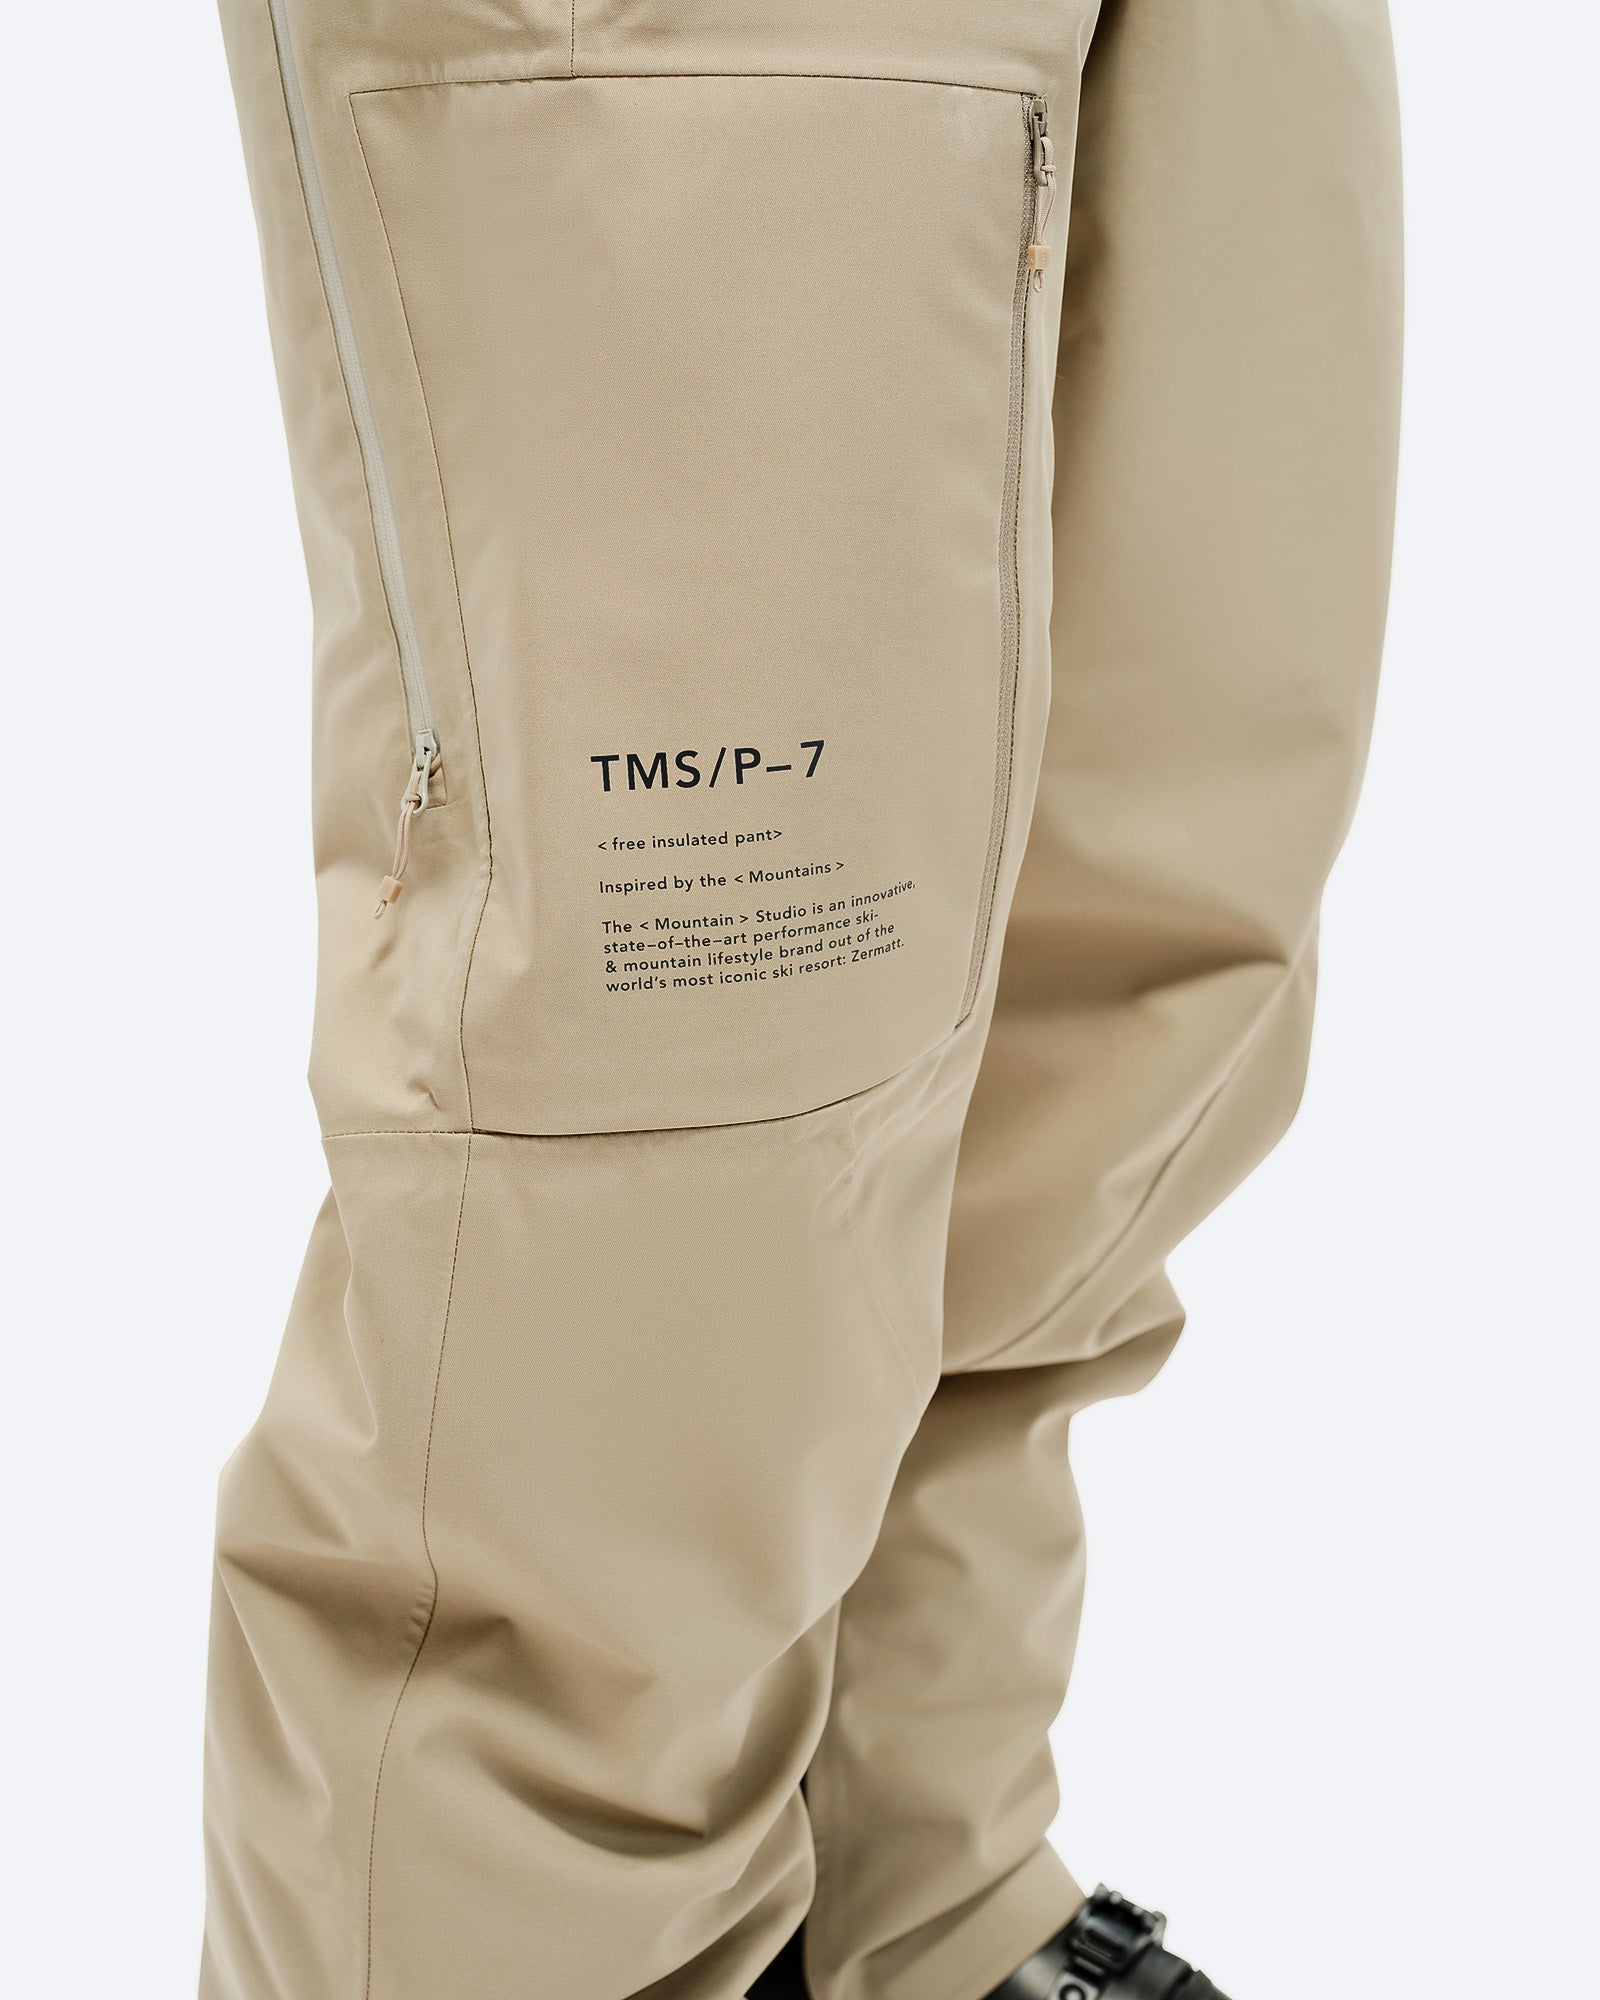 Leg pocket with YKK Aquaguard zipper and print.
Ventilation zipper at leg, YKK Aquaguard technology. card image